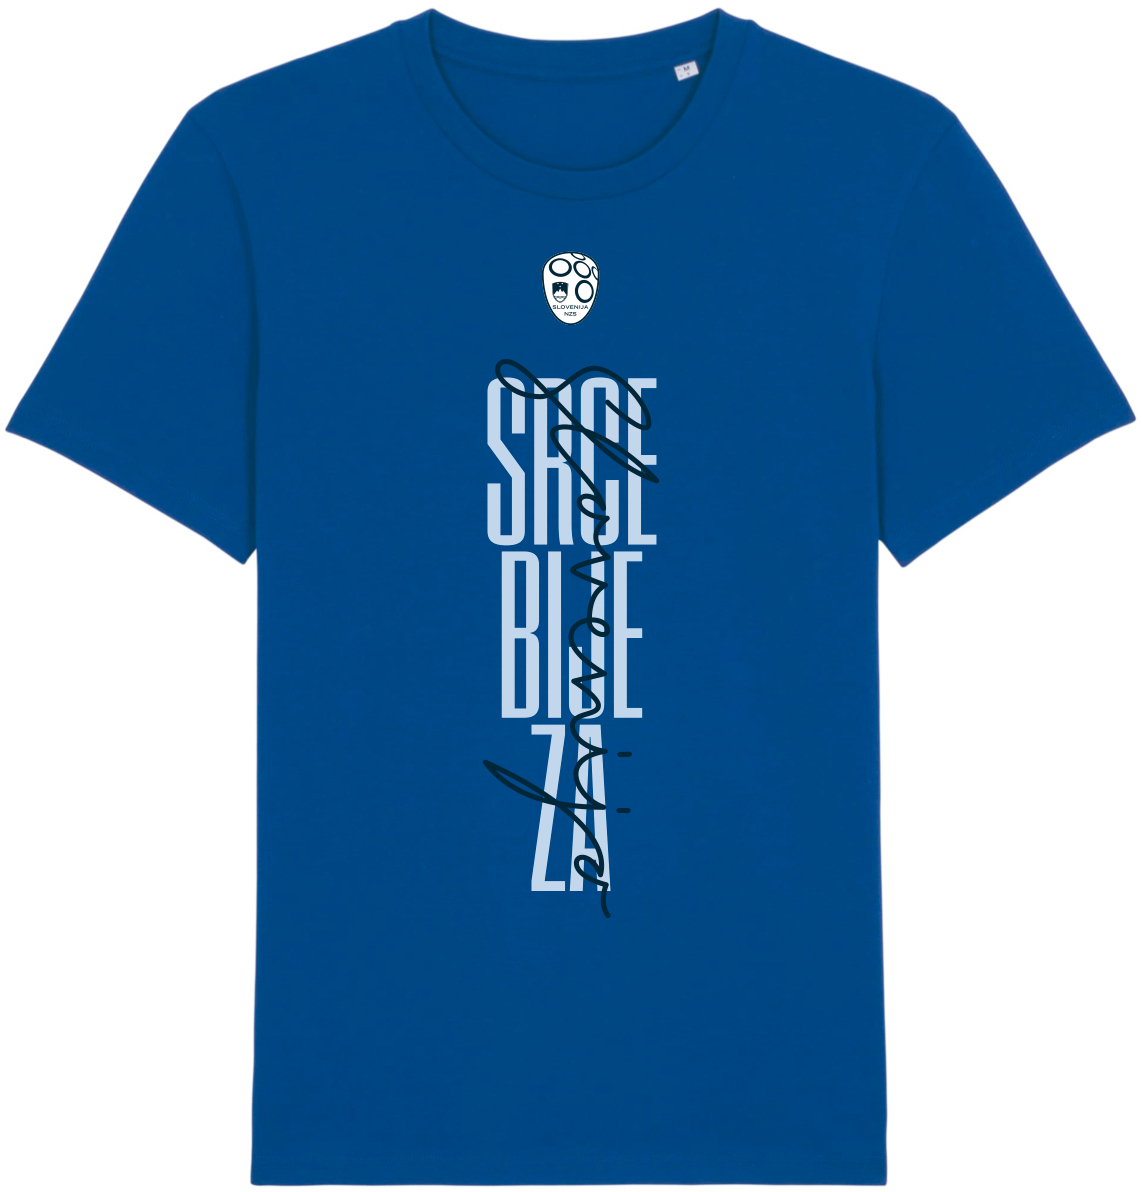 podkoszulek Nike NZSx11TS Slove SRCE BIJE shirt men blue